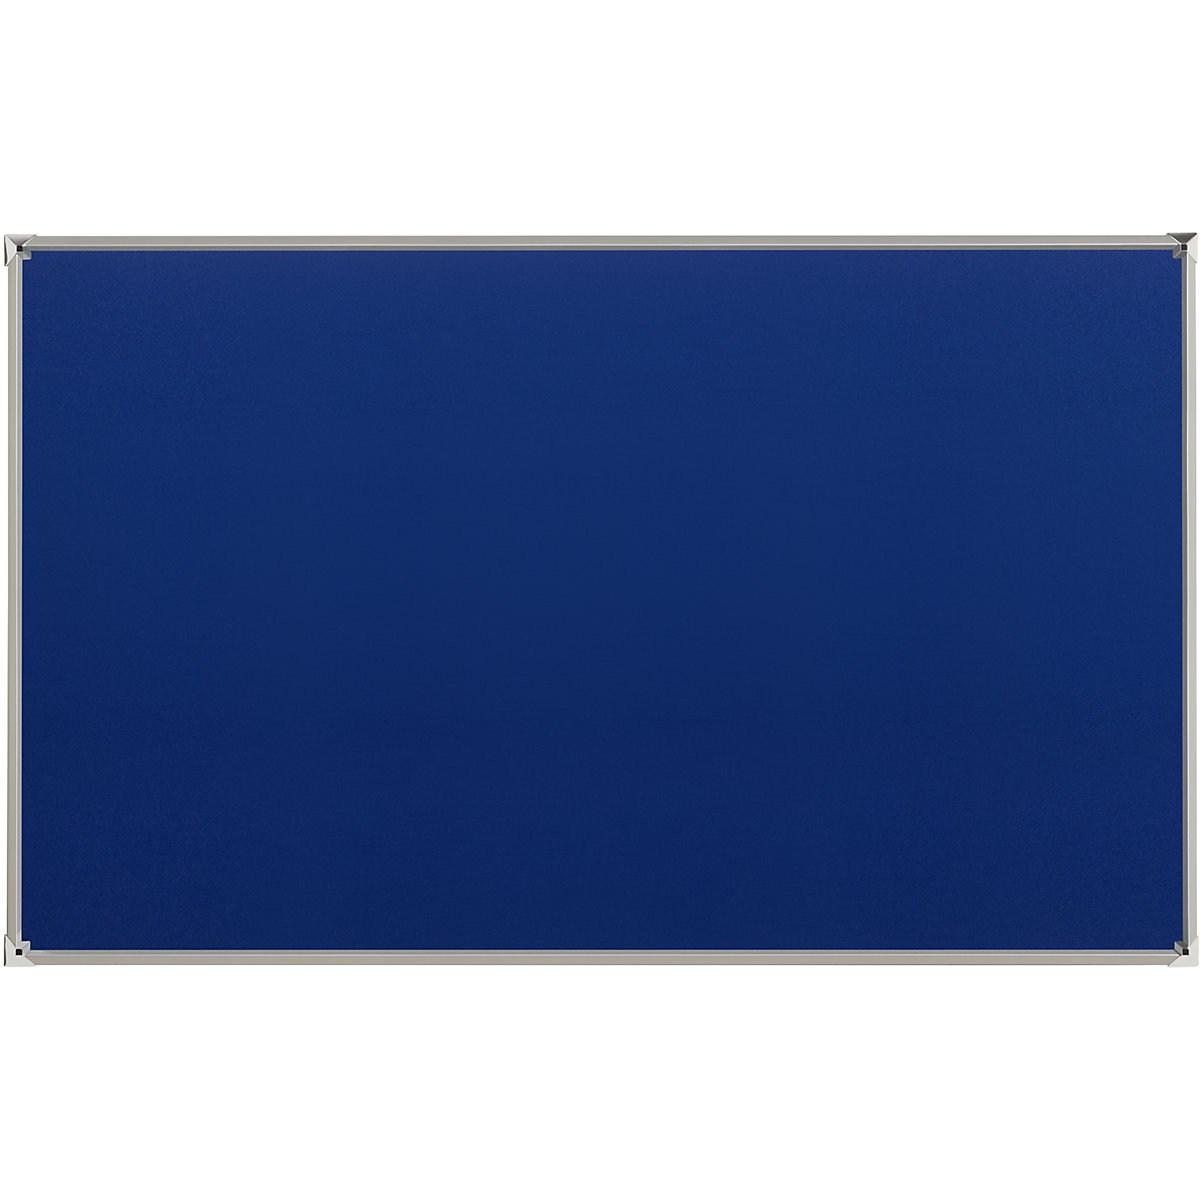 EUROKRAFTpro Pinnwand mit Alu-Rahmen, Stoffbezug, blau, BxH 1800 x 1200 mm